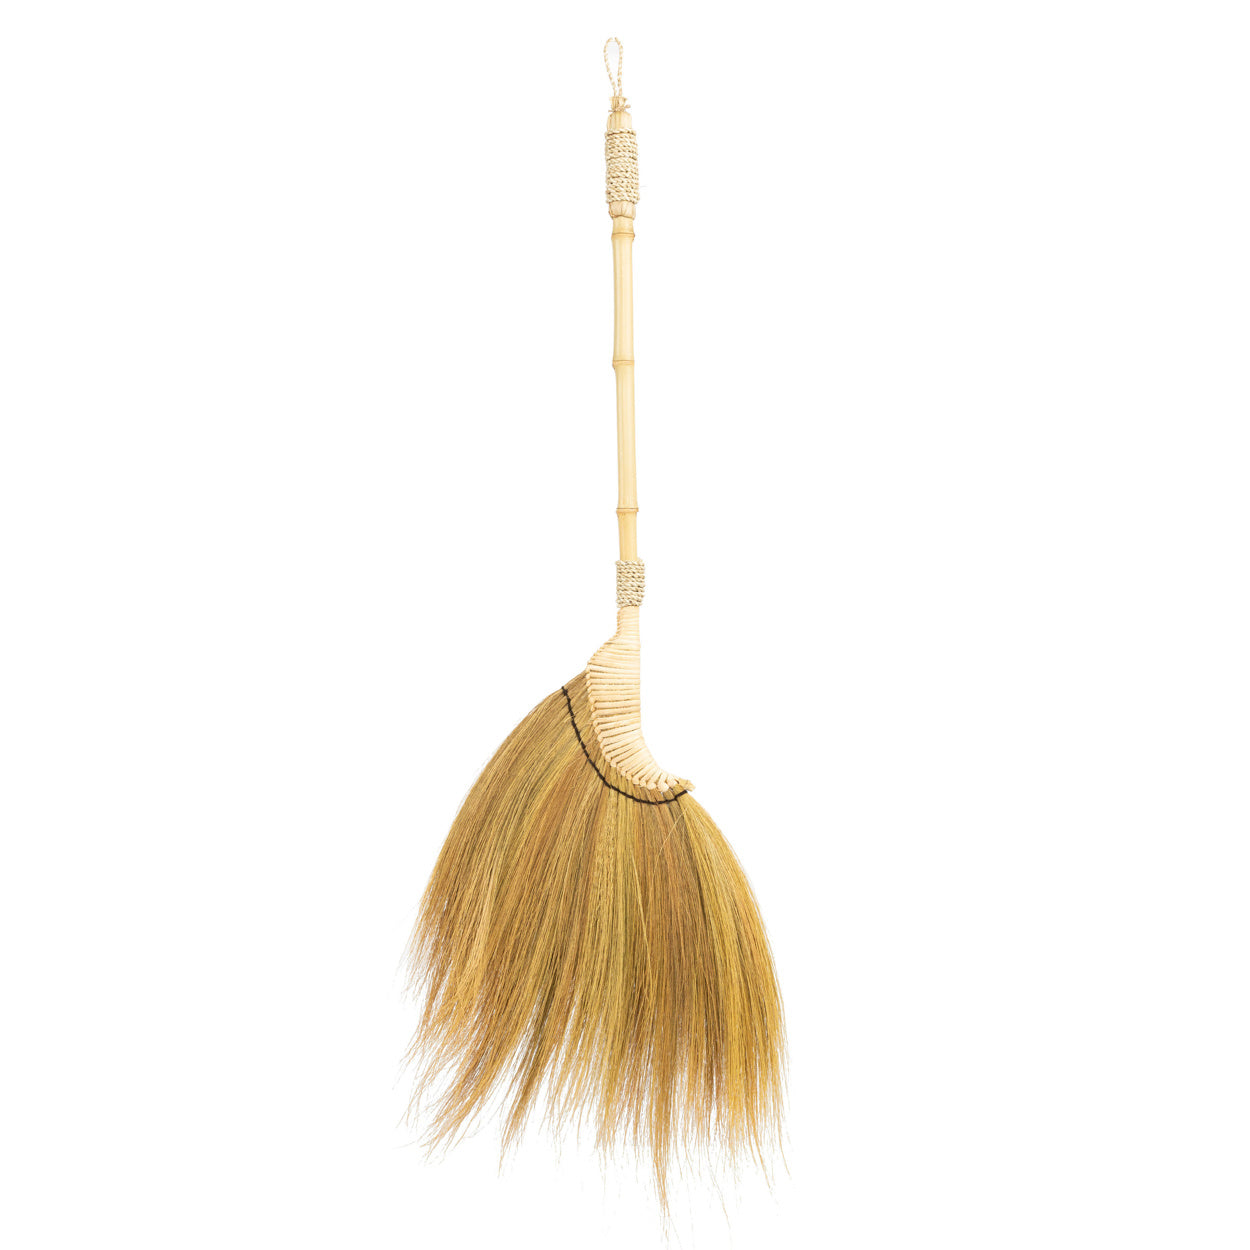 The Rayung Broom 